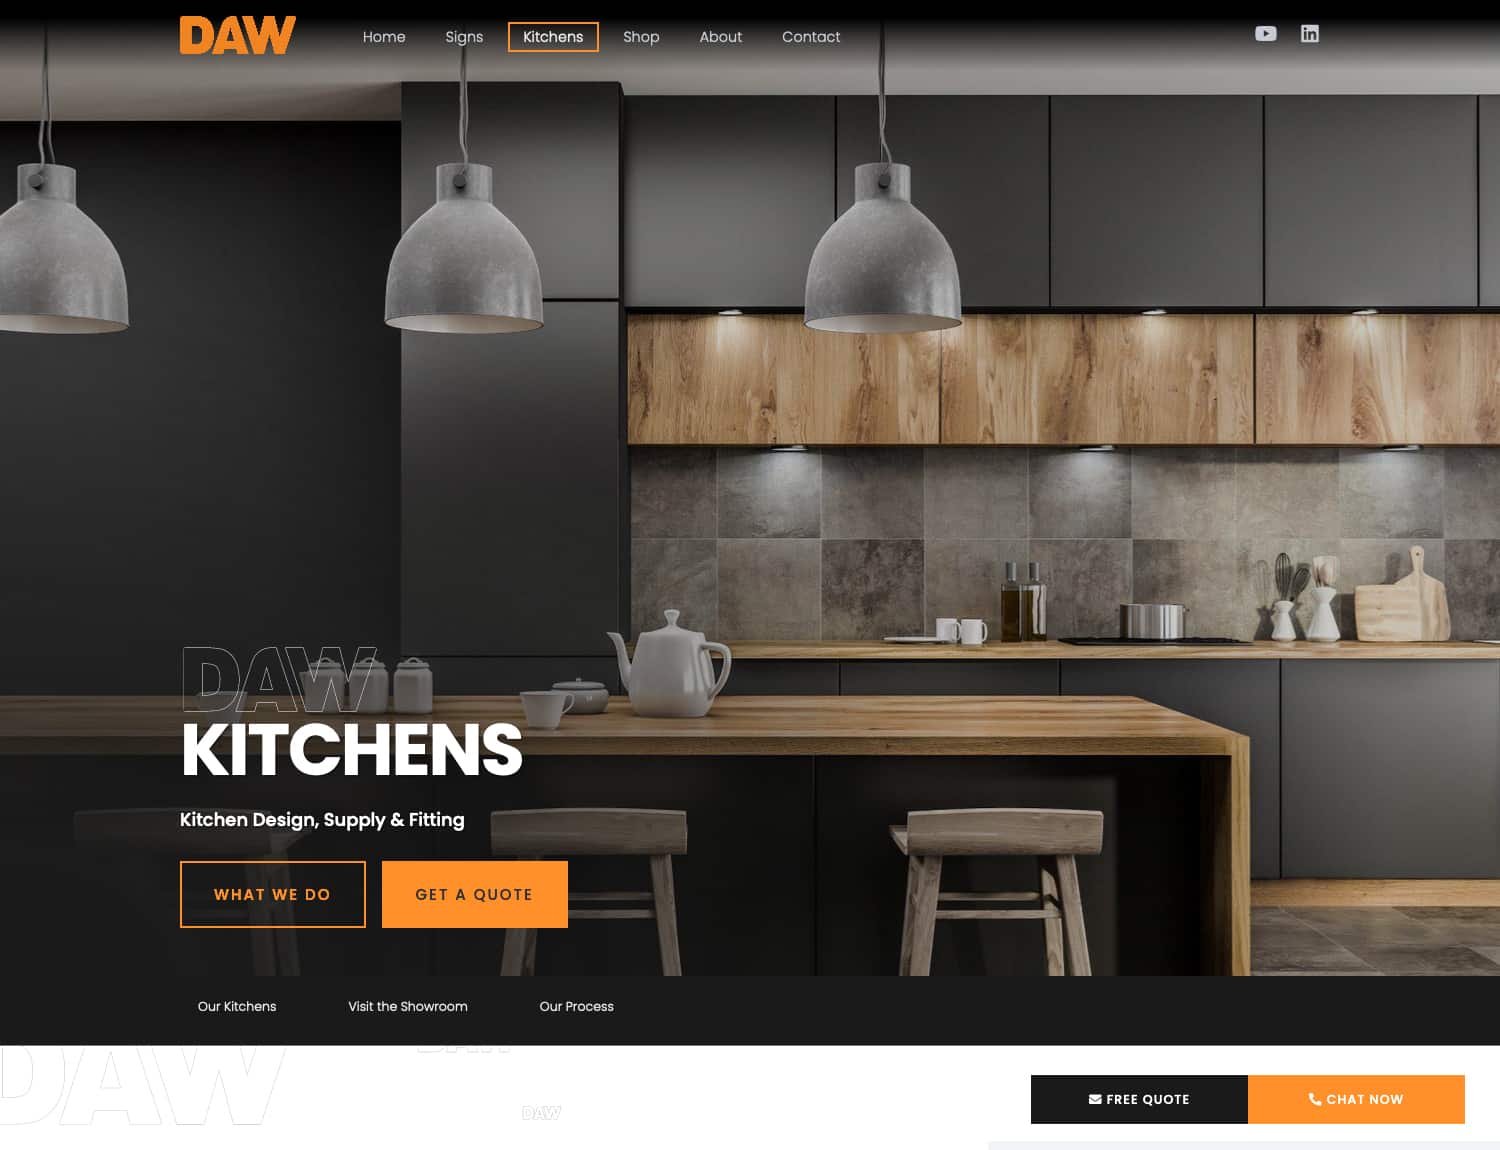 Website for Kitchen showroom business in Glasgow